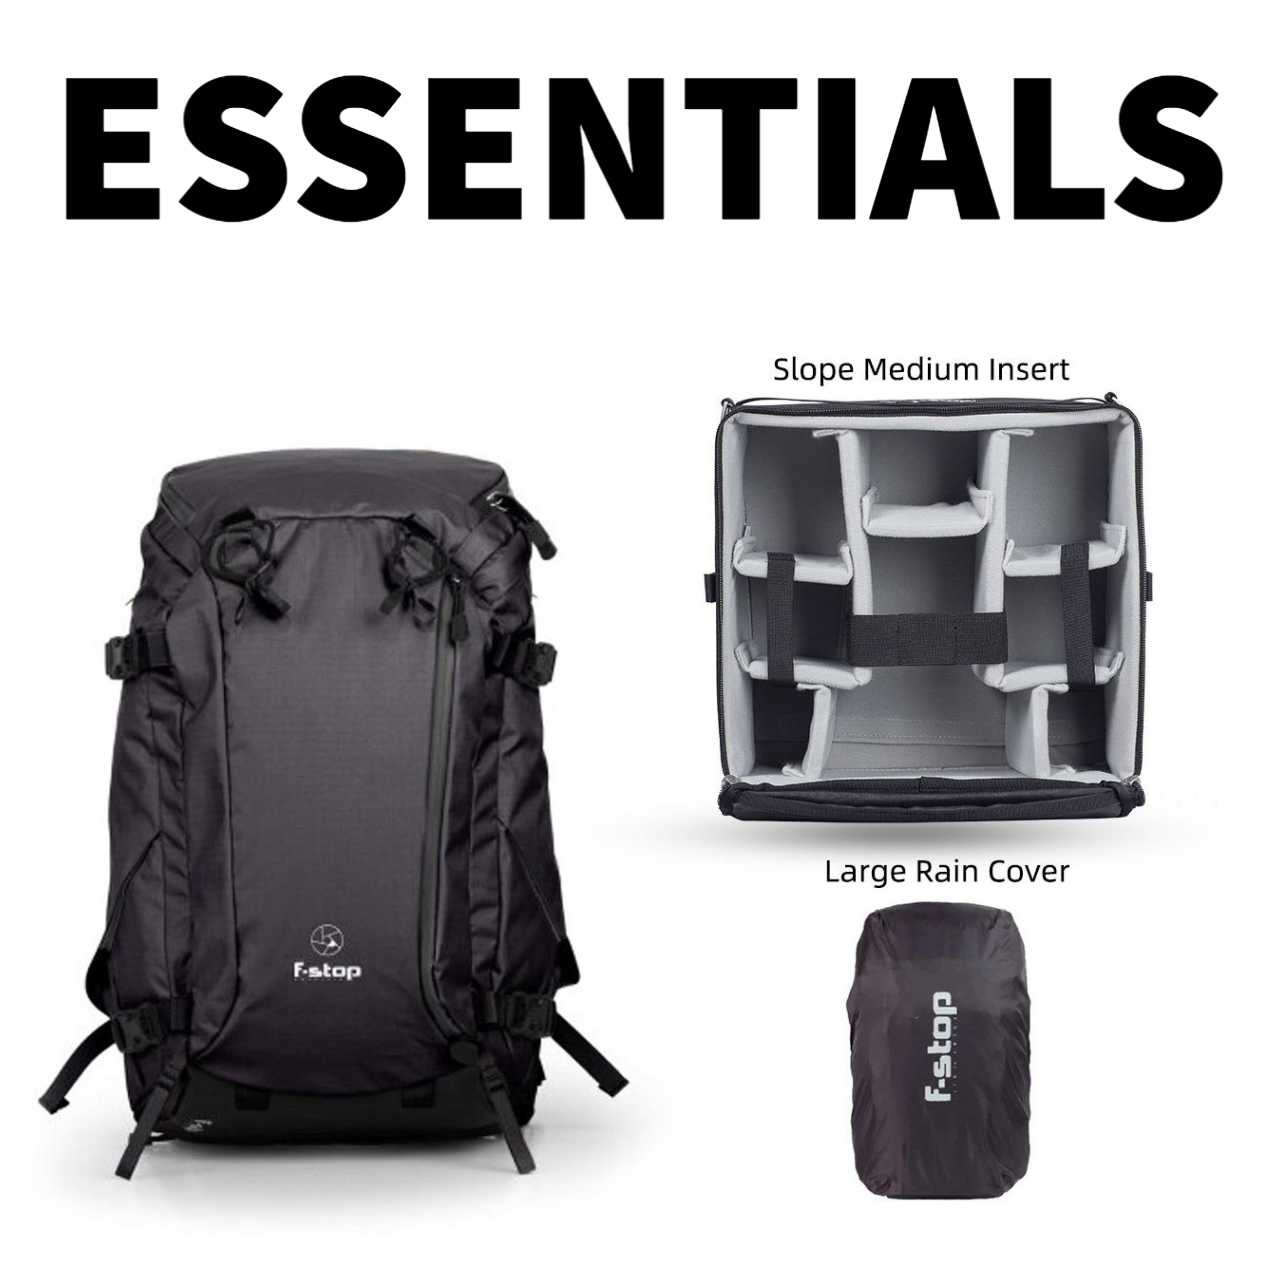 f-stop Lotus 32 liter camera backpack Essentials Bundle in the Anthracite Black color